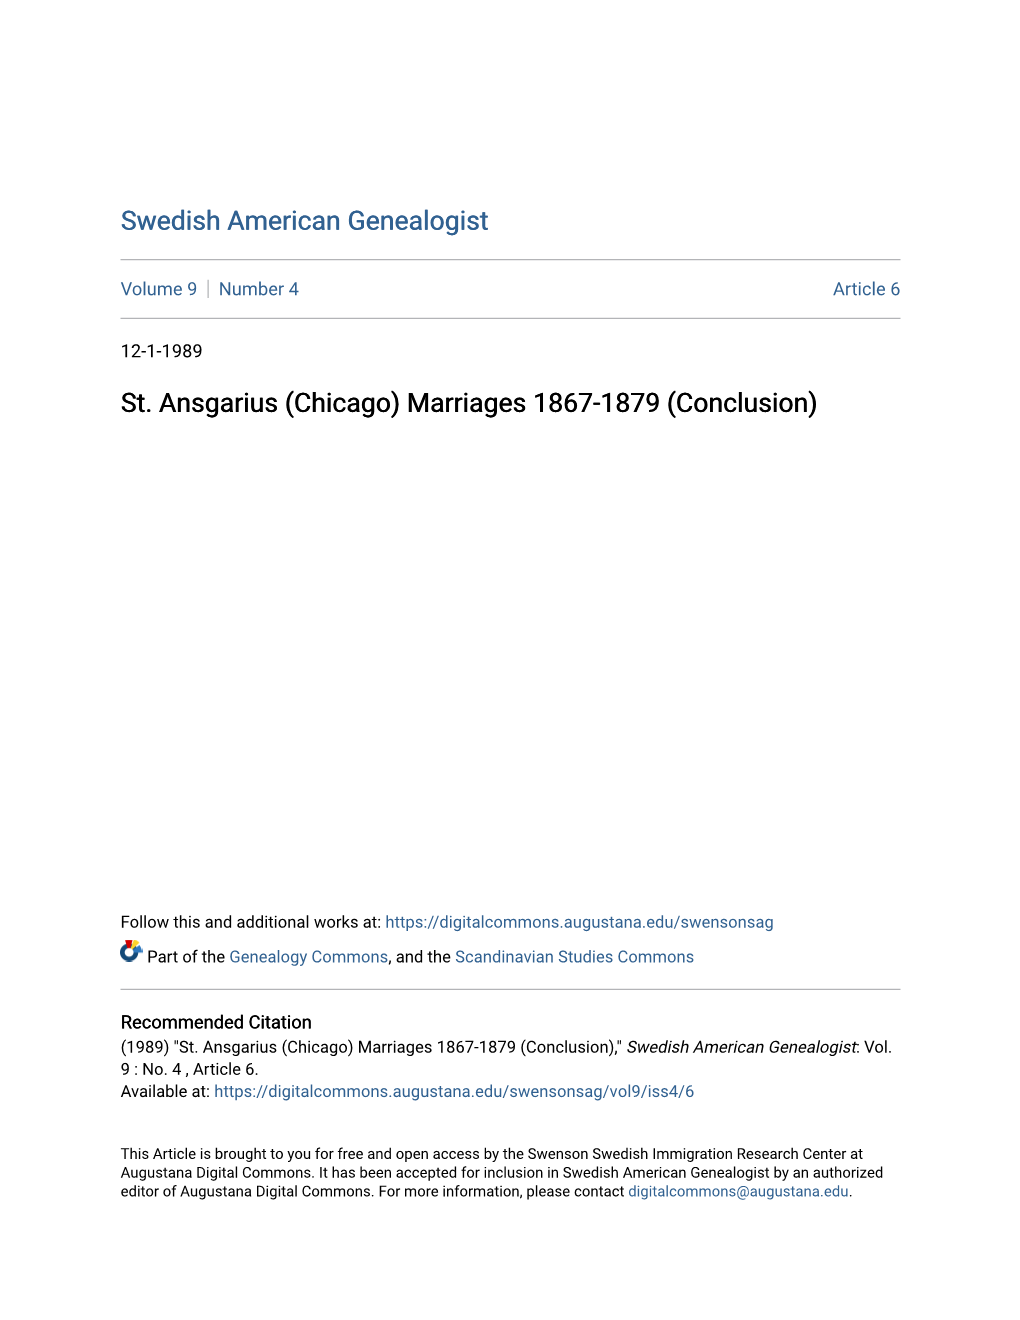 St. Ansgarius (Chicago) Marriages 1867-1879 (Conclusion)